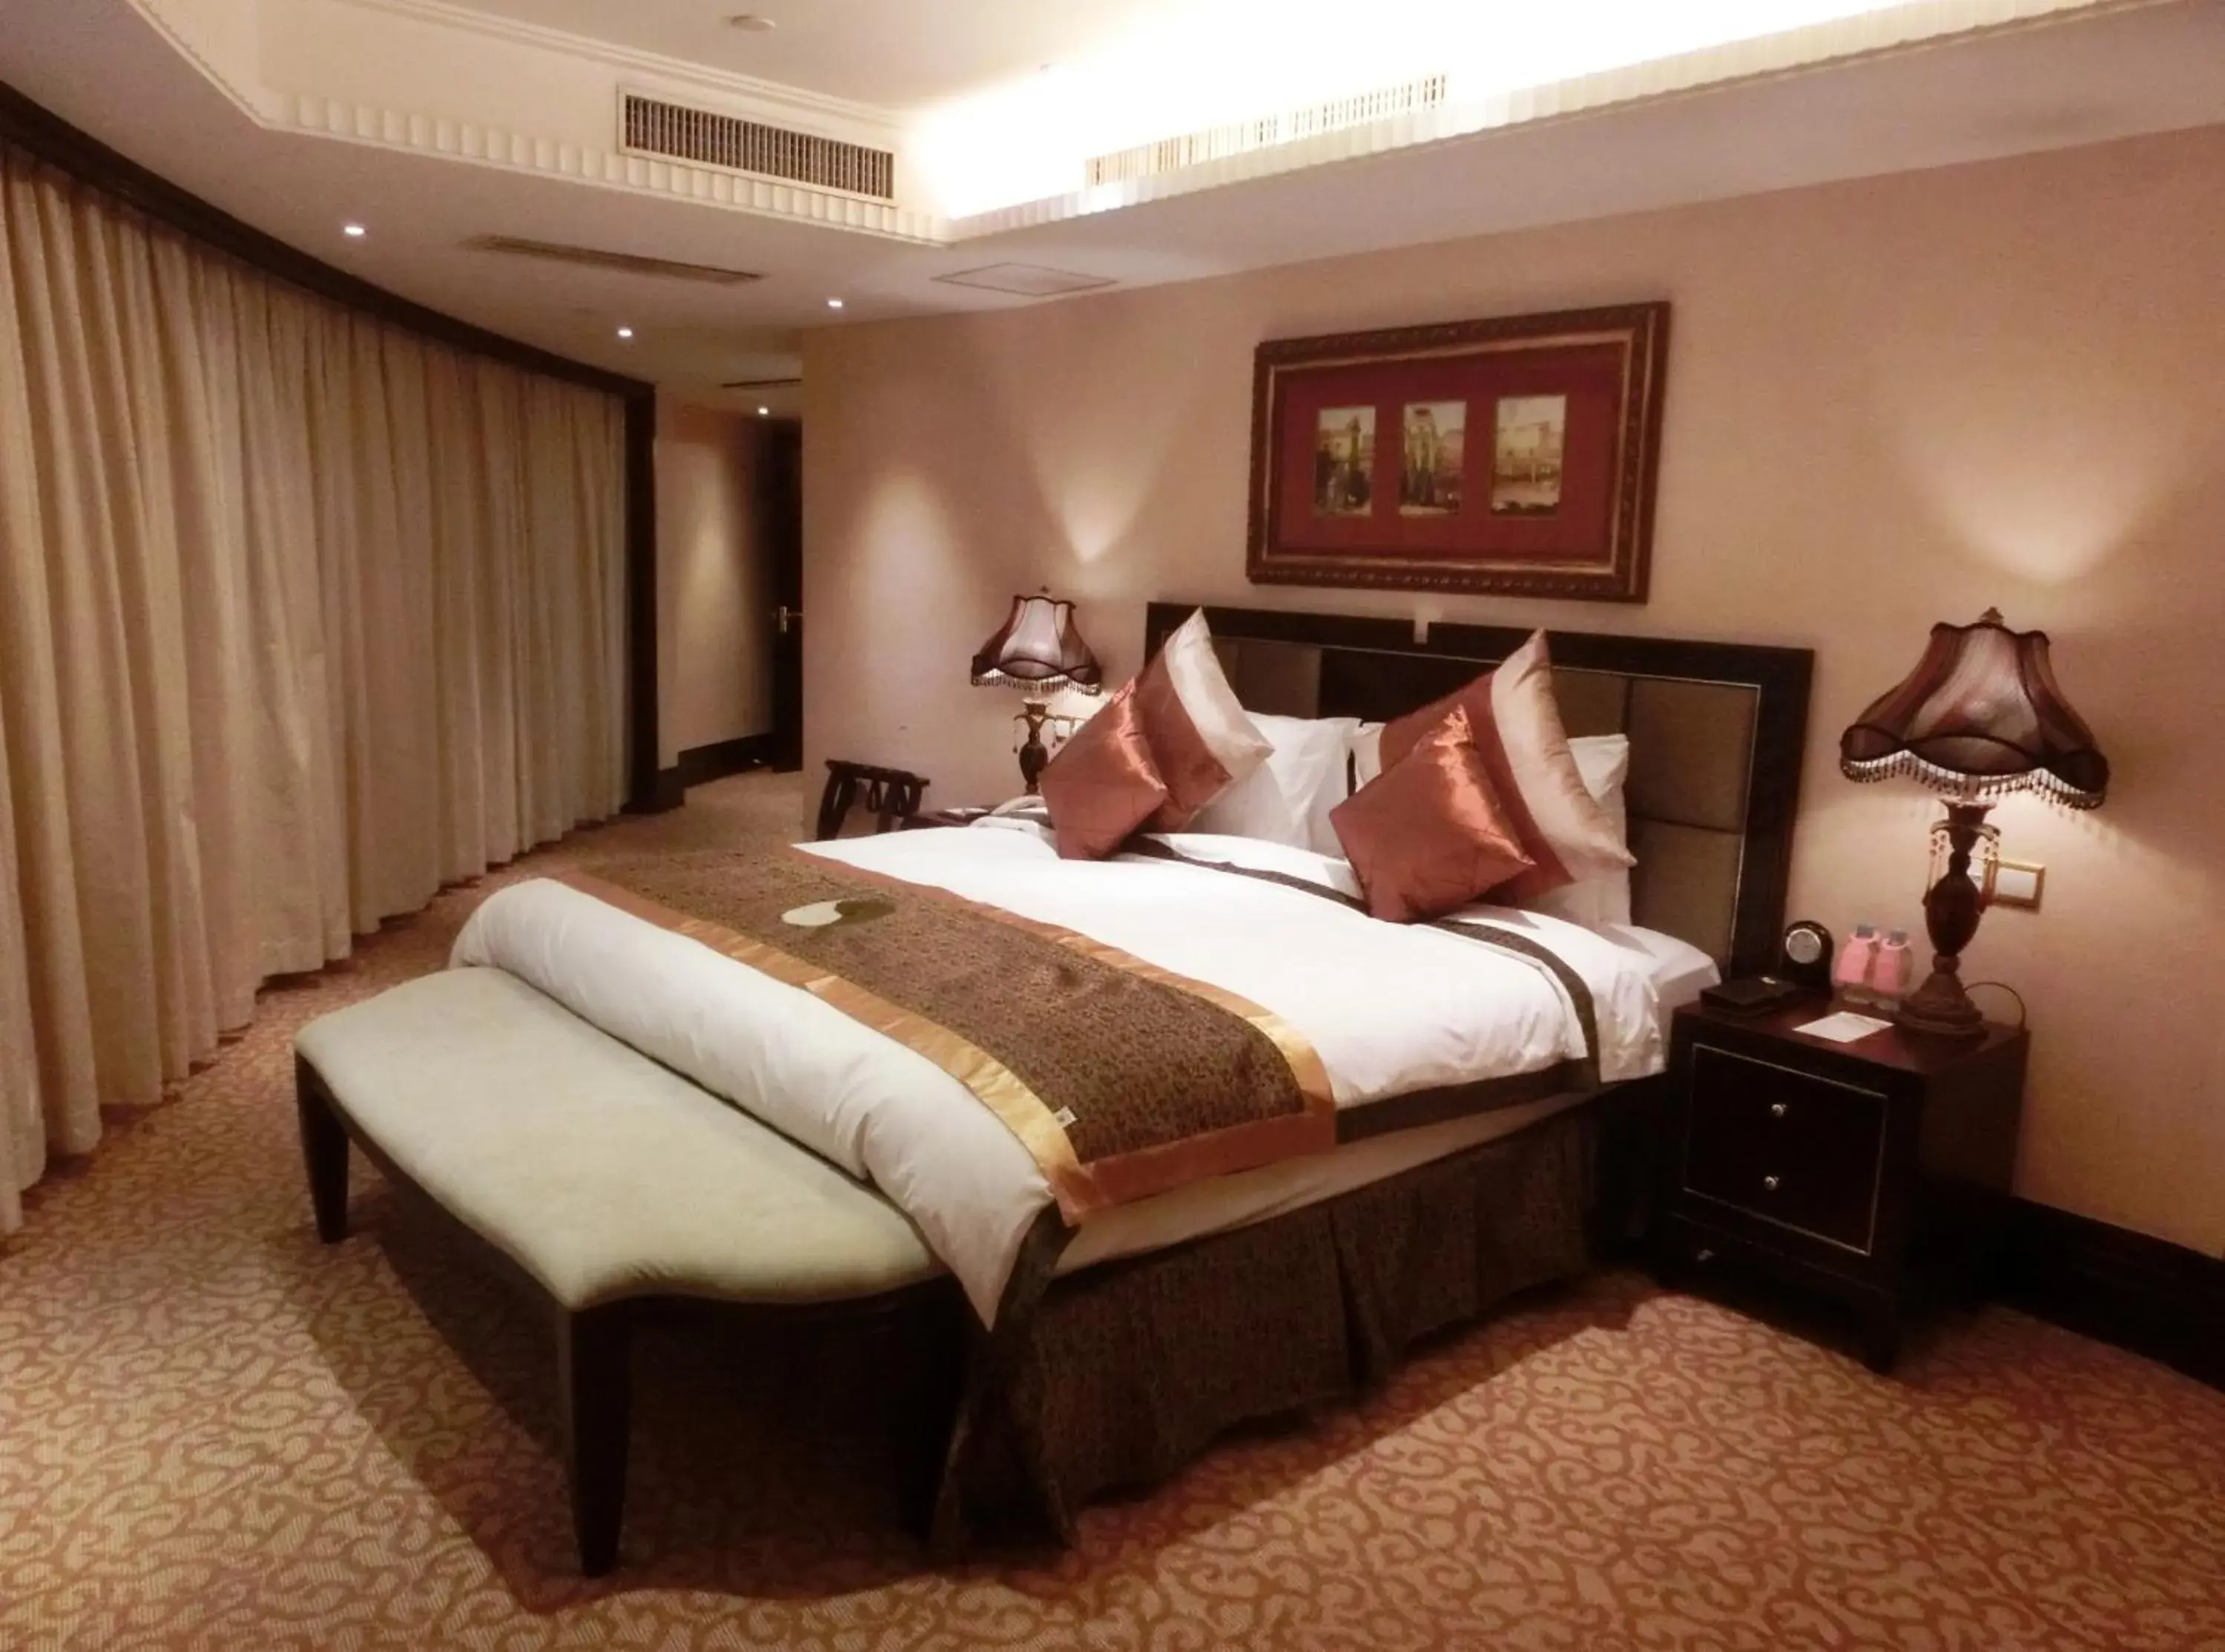 Executive Suite in Royal Mediterranean Hotel